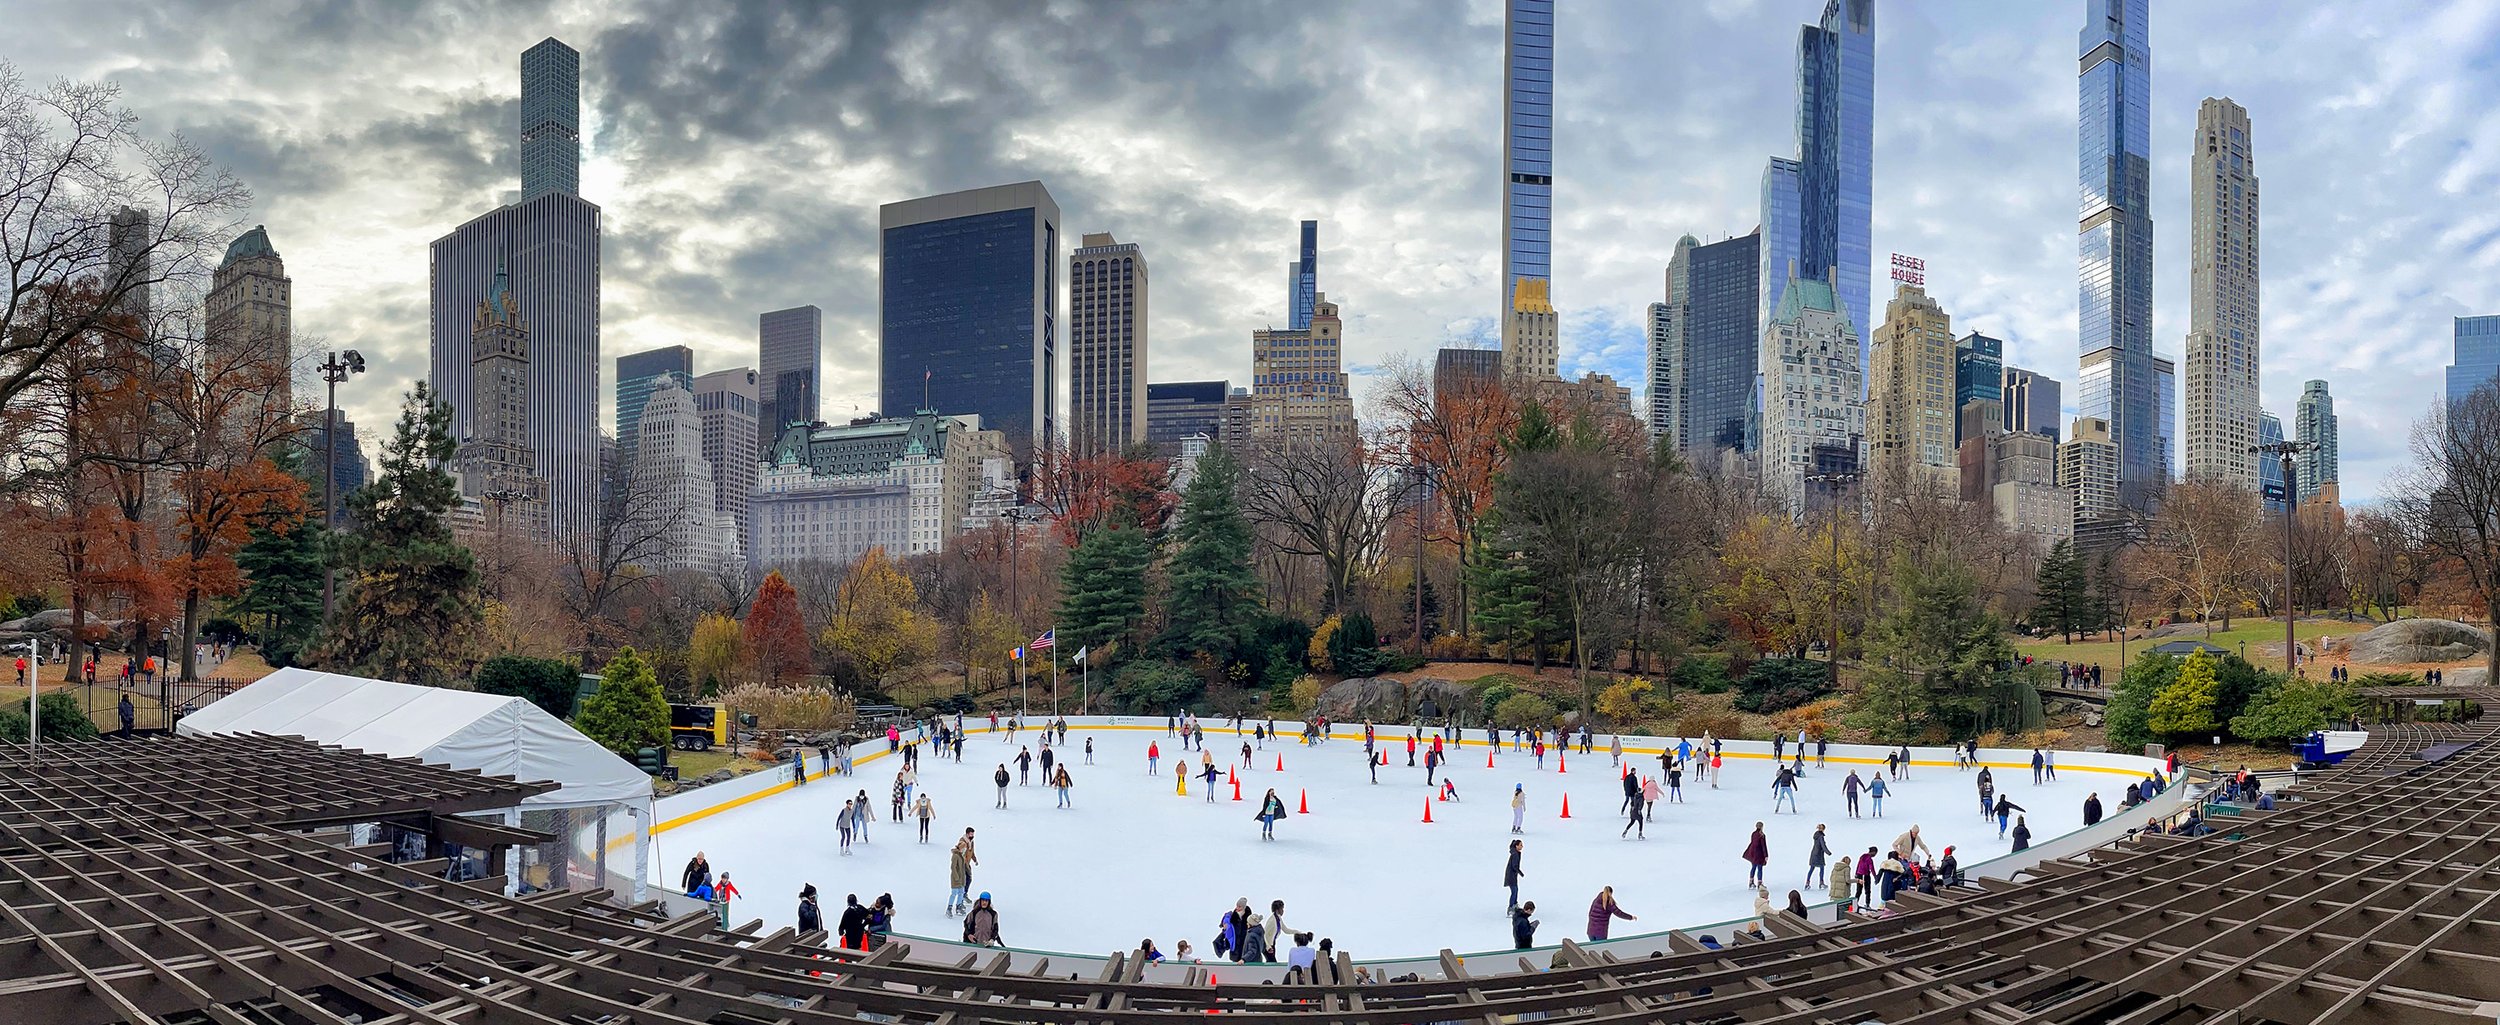 December Afternoon in Central Park 